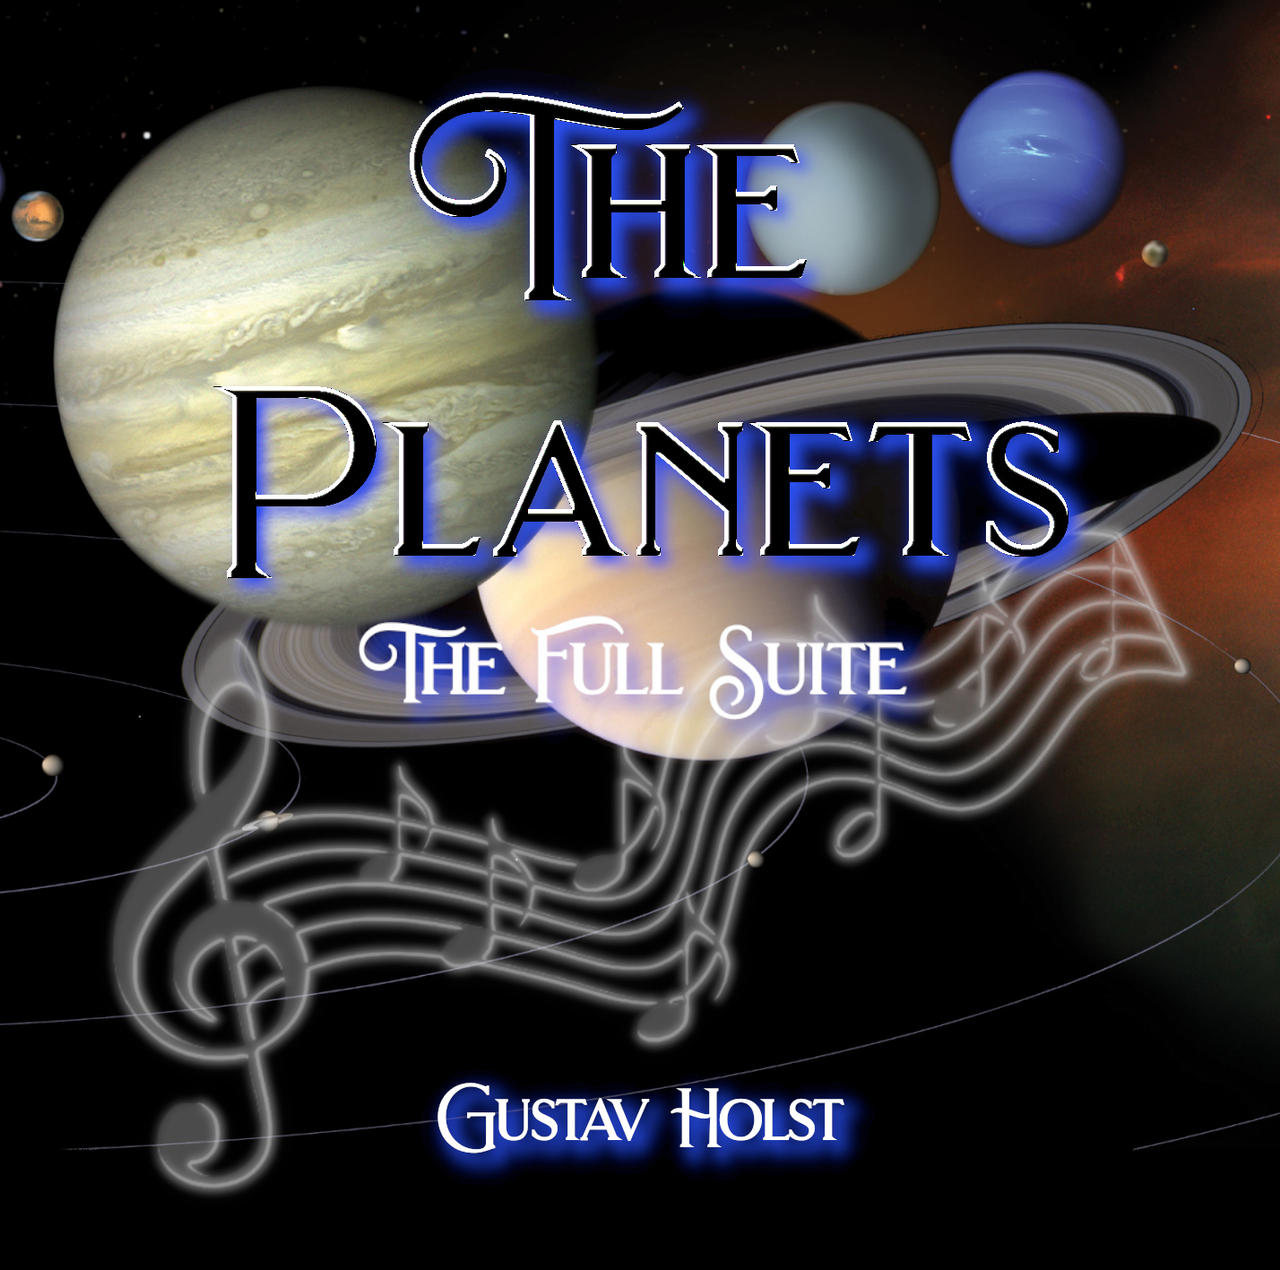 The Planets Album Cover Design